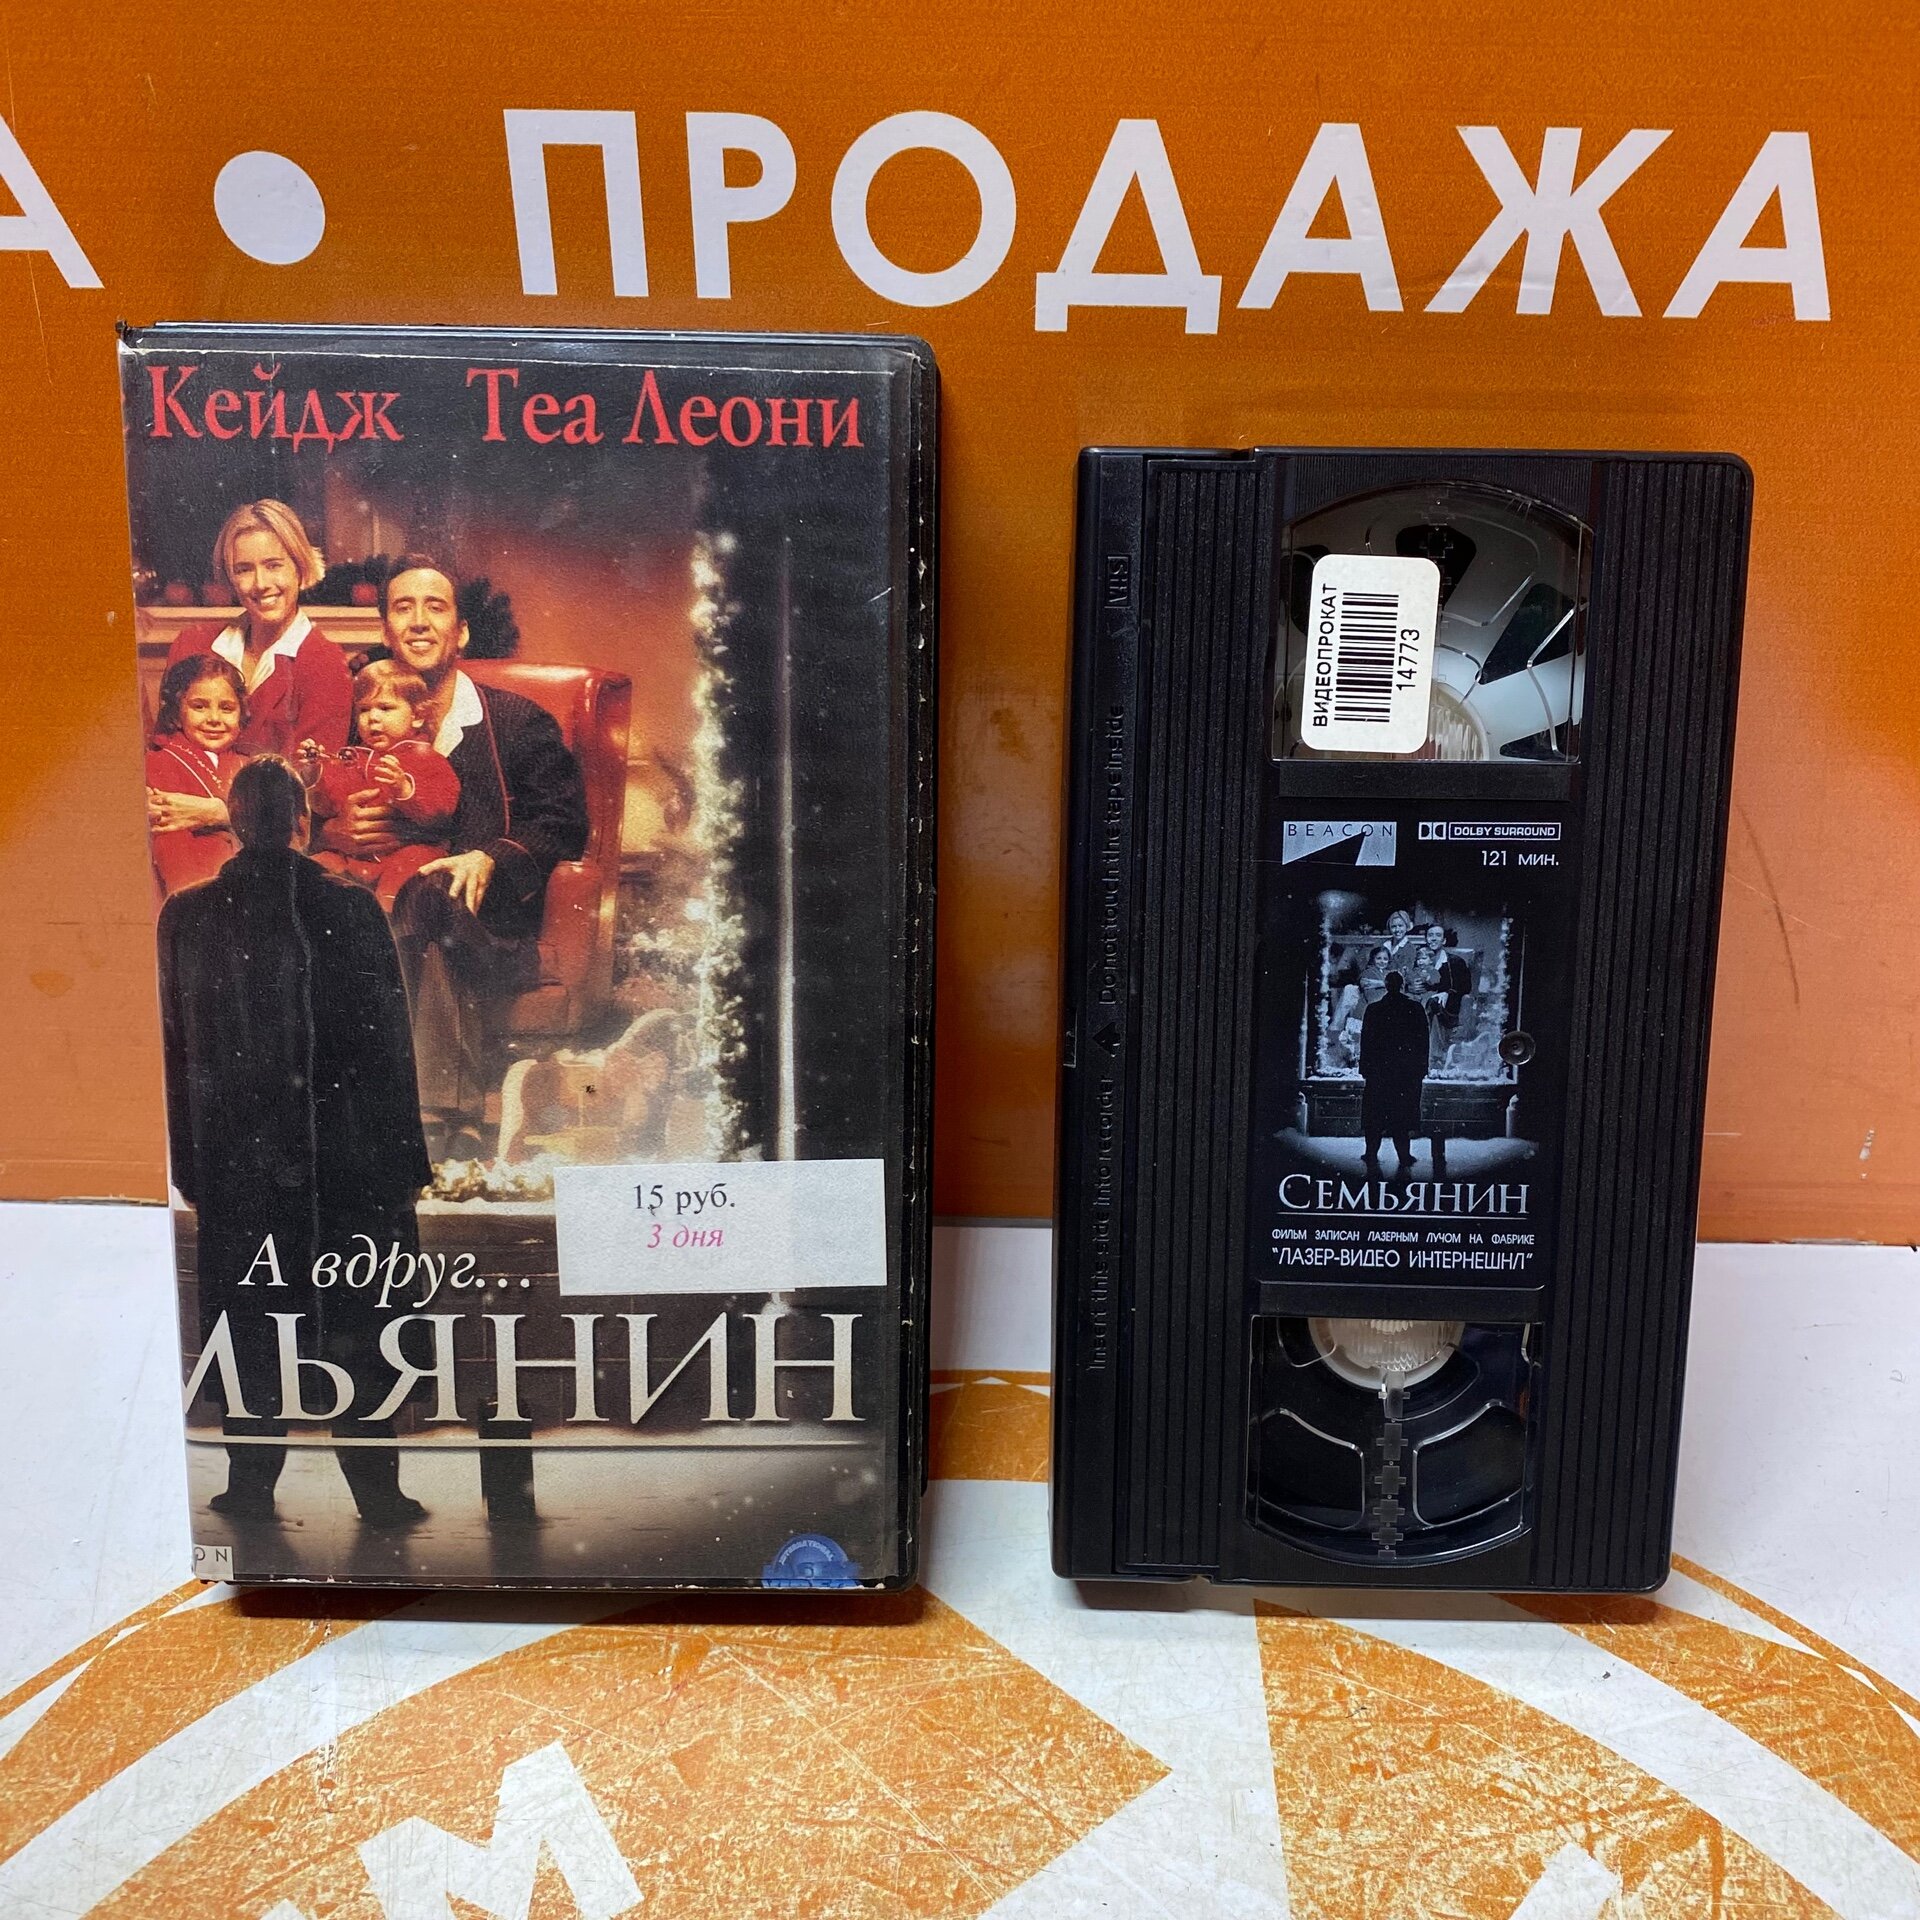 VHS-кассета "Семьянин"